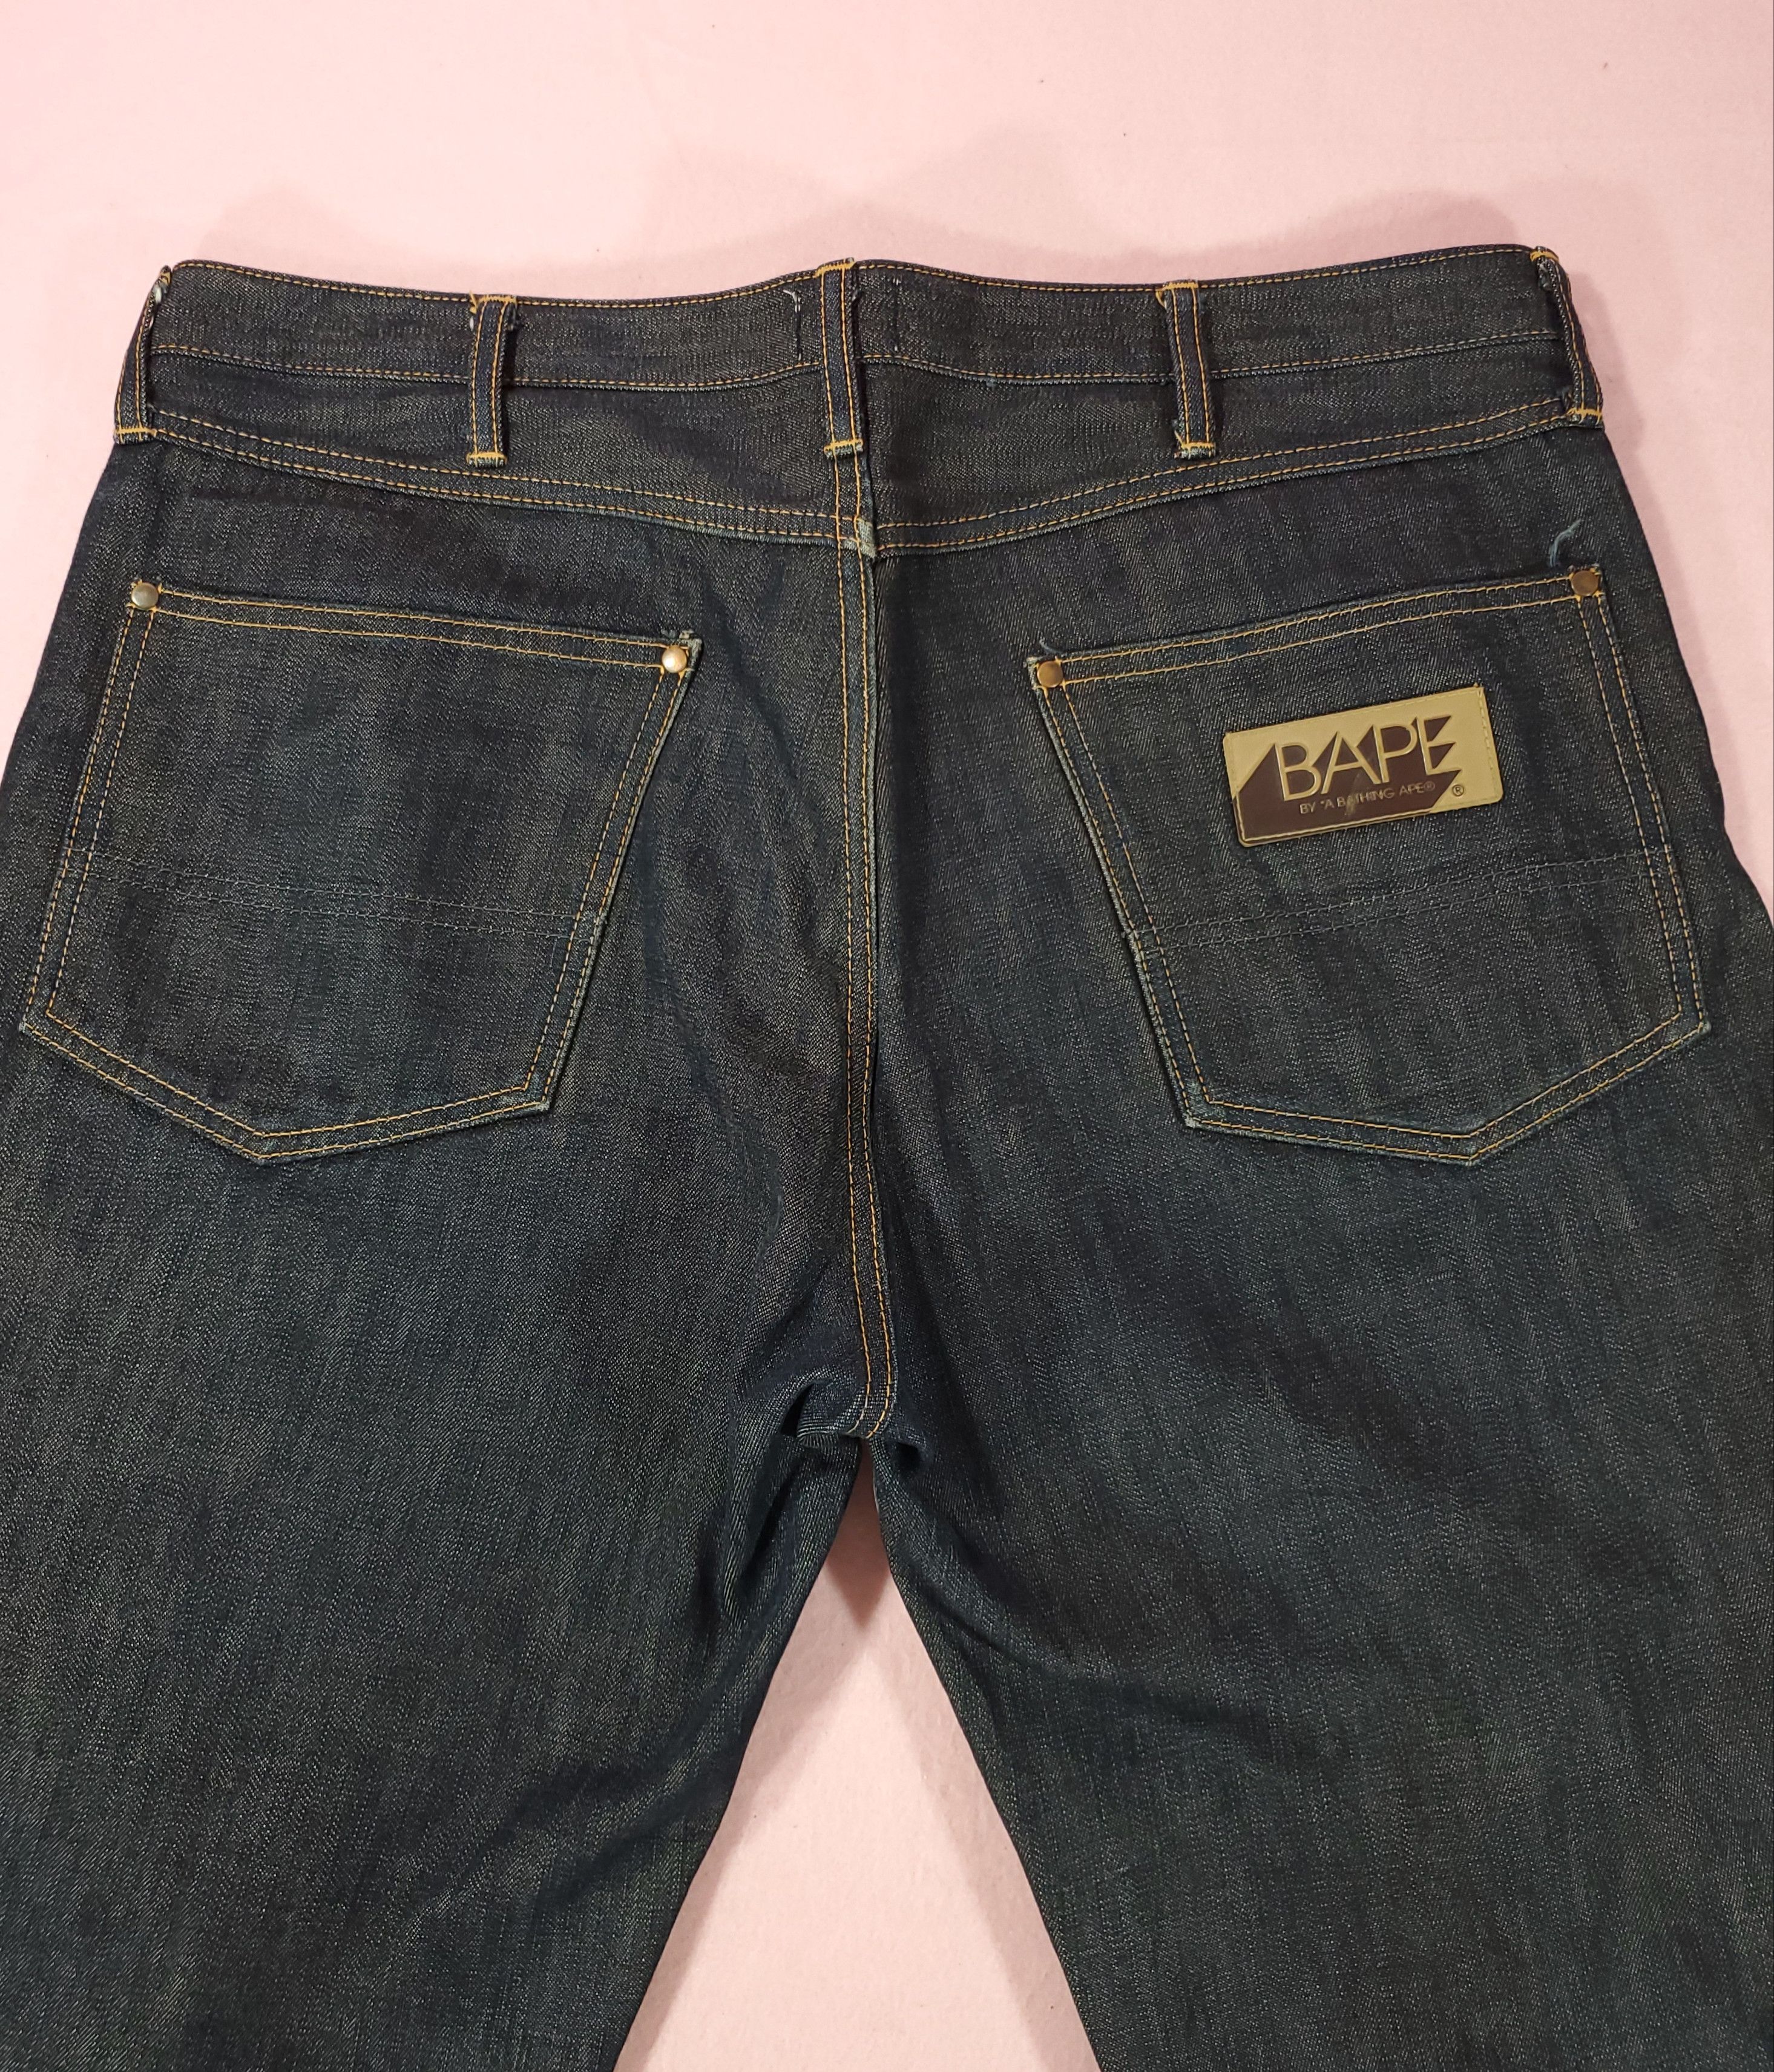 Bape Bape Twinsta STA Yellow Print Dark Denim Jeans XL Bapesta Size US 38 / EU 54 - 5 Thumbnail